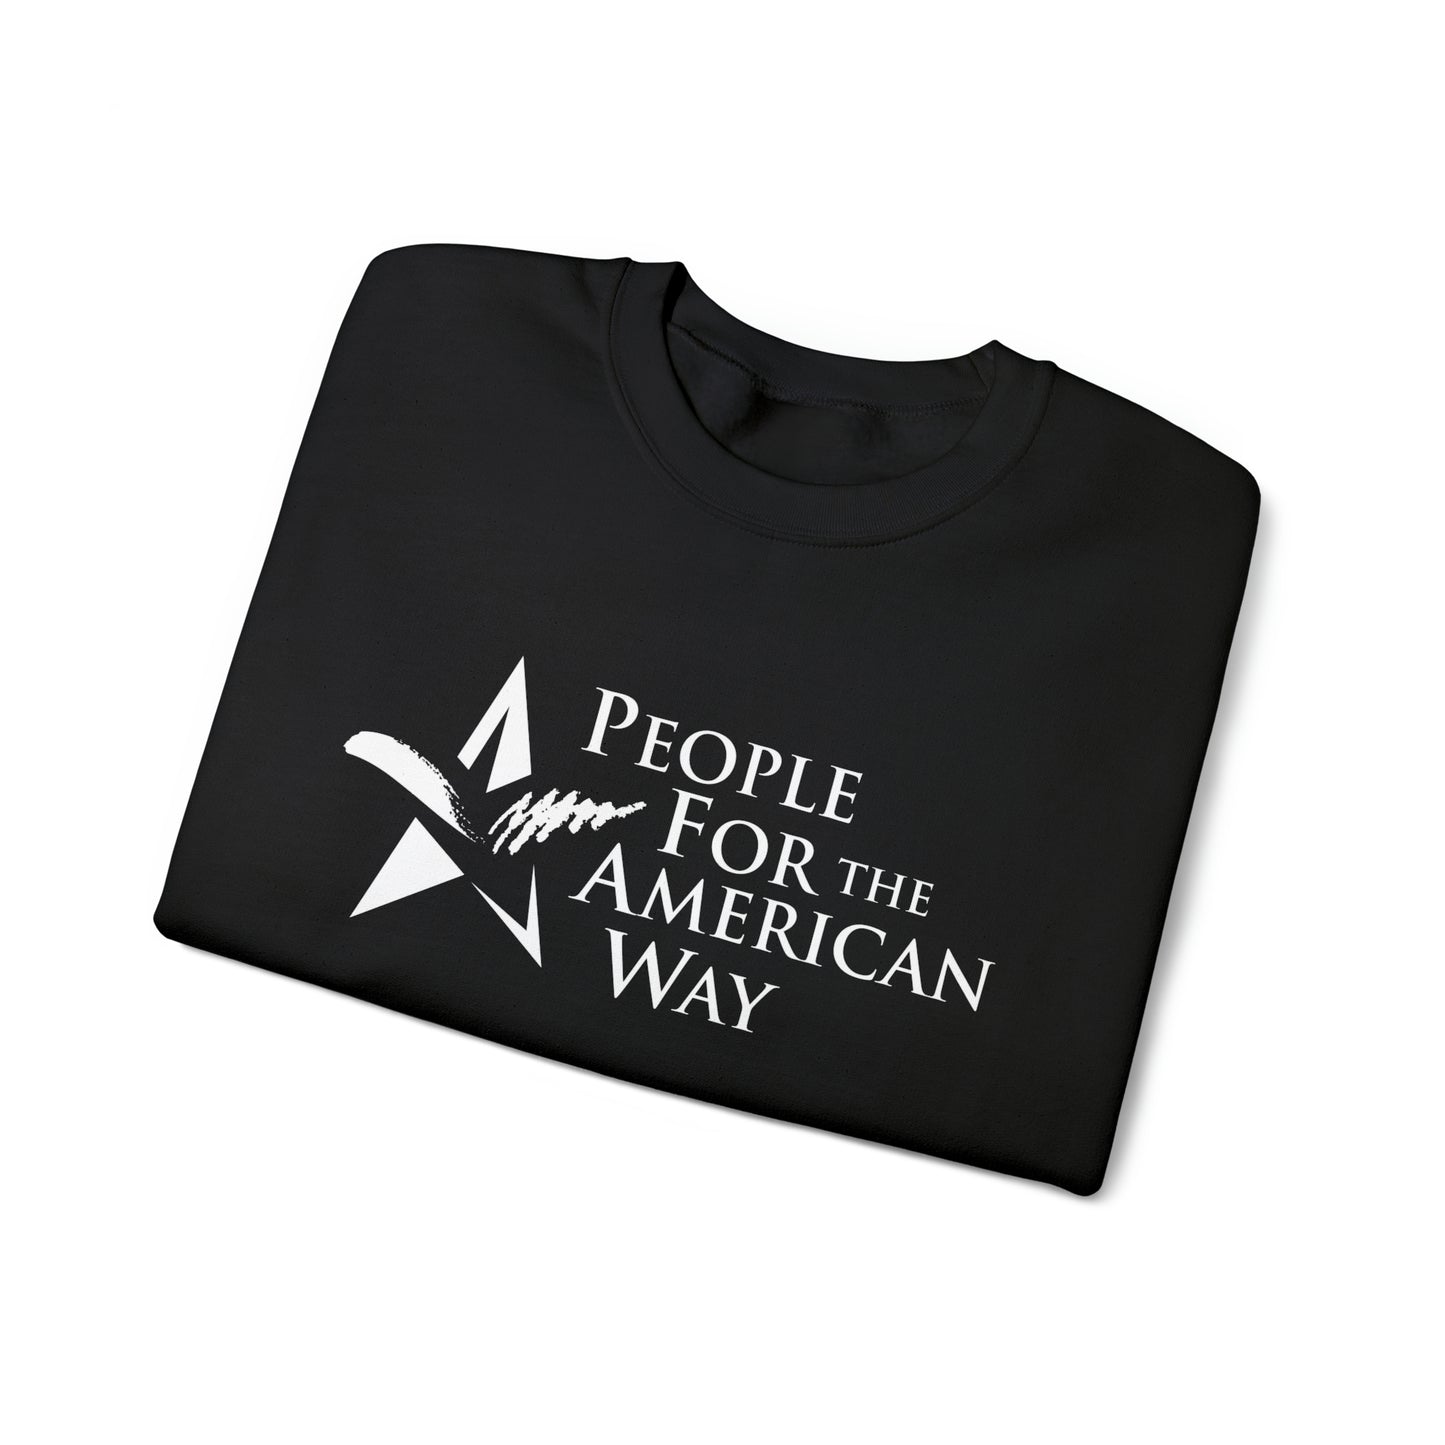 People For the American Way Logo Crewneck Sweatshirt